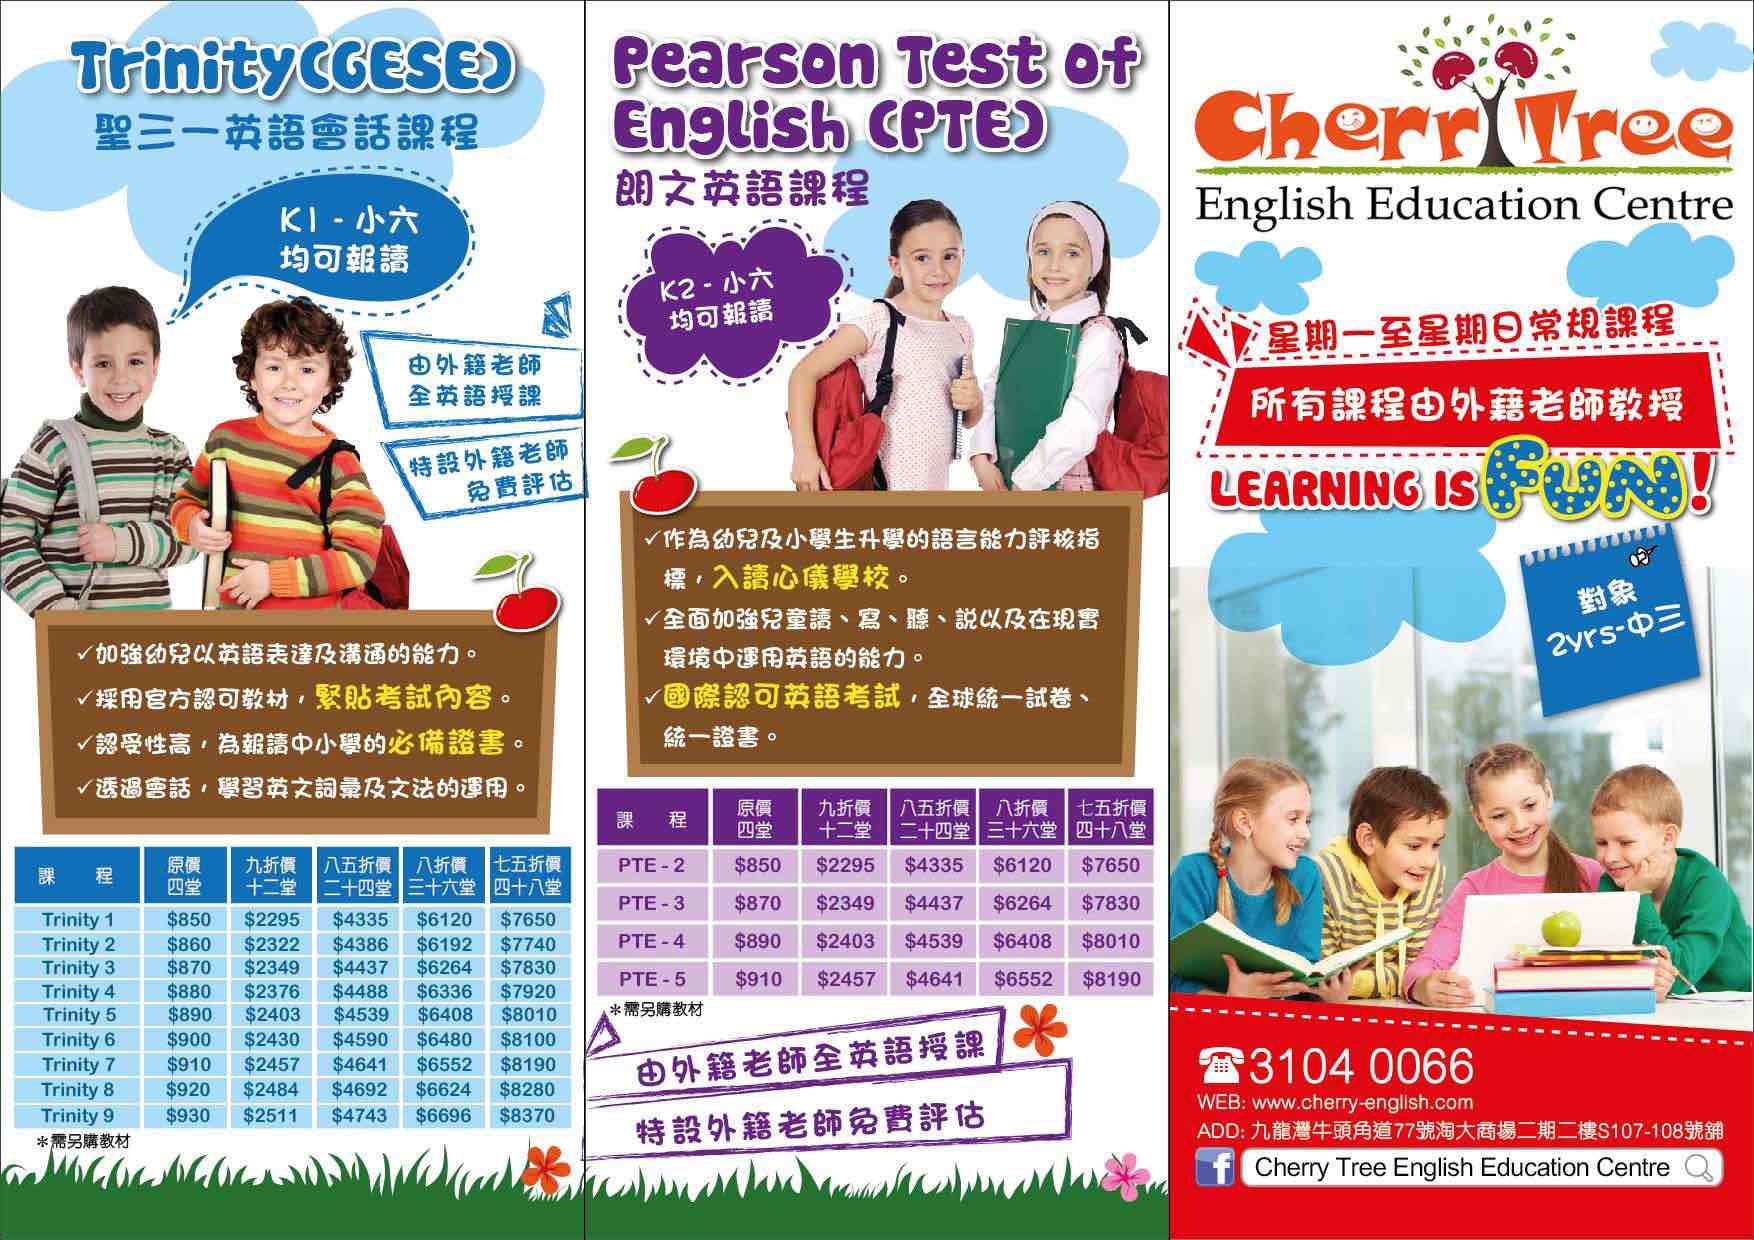 Cherry Tree English Education Centre的特許經營香港區加盟店項目7